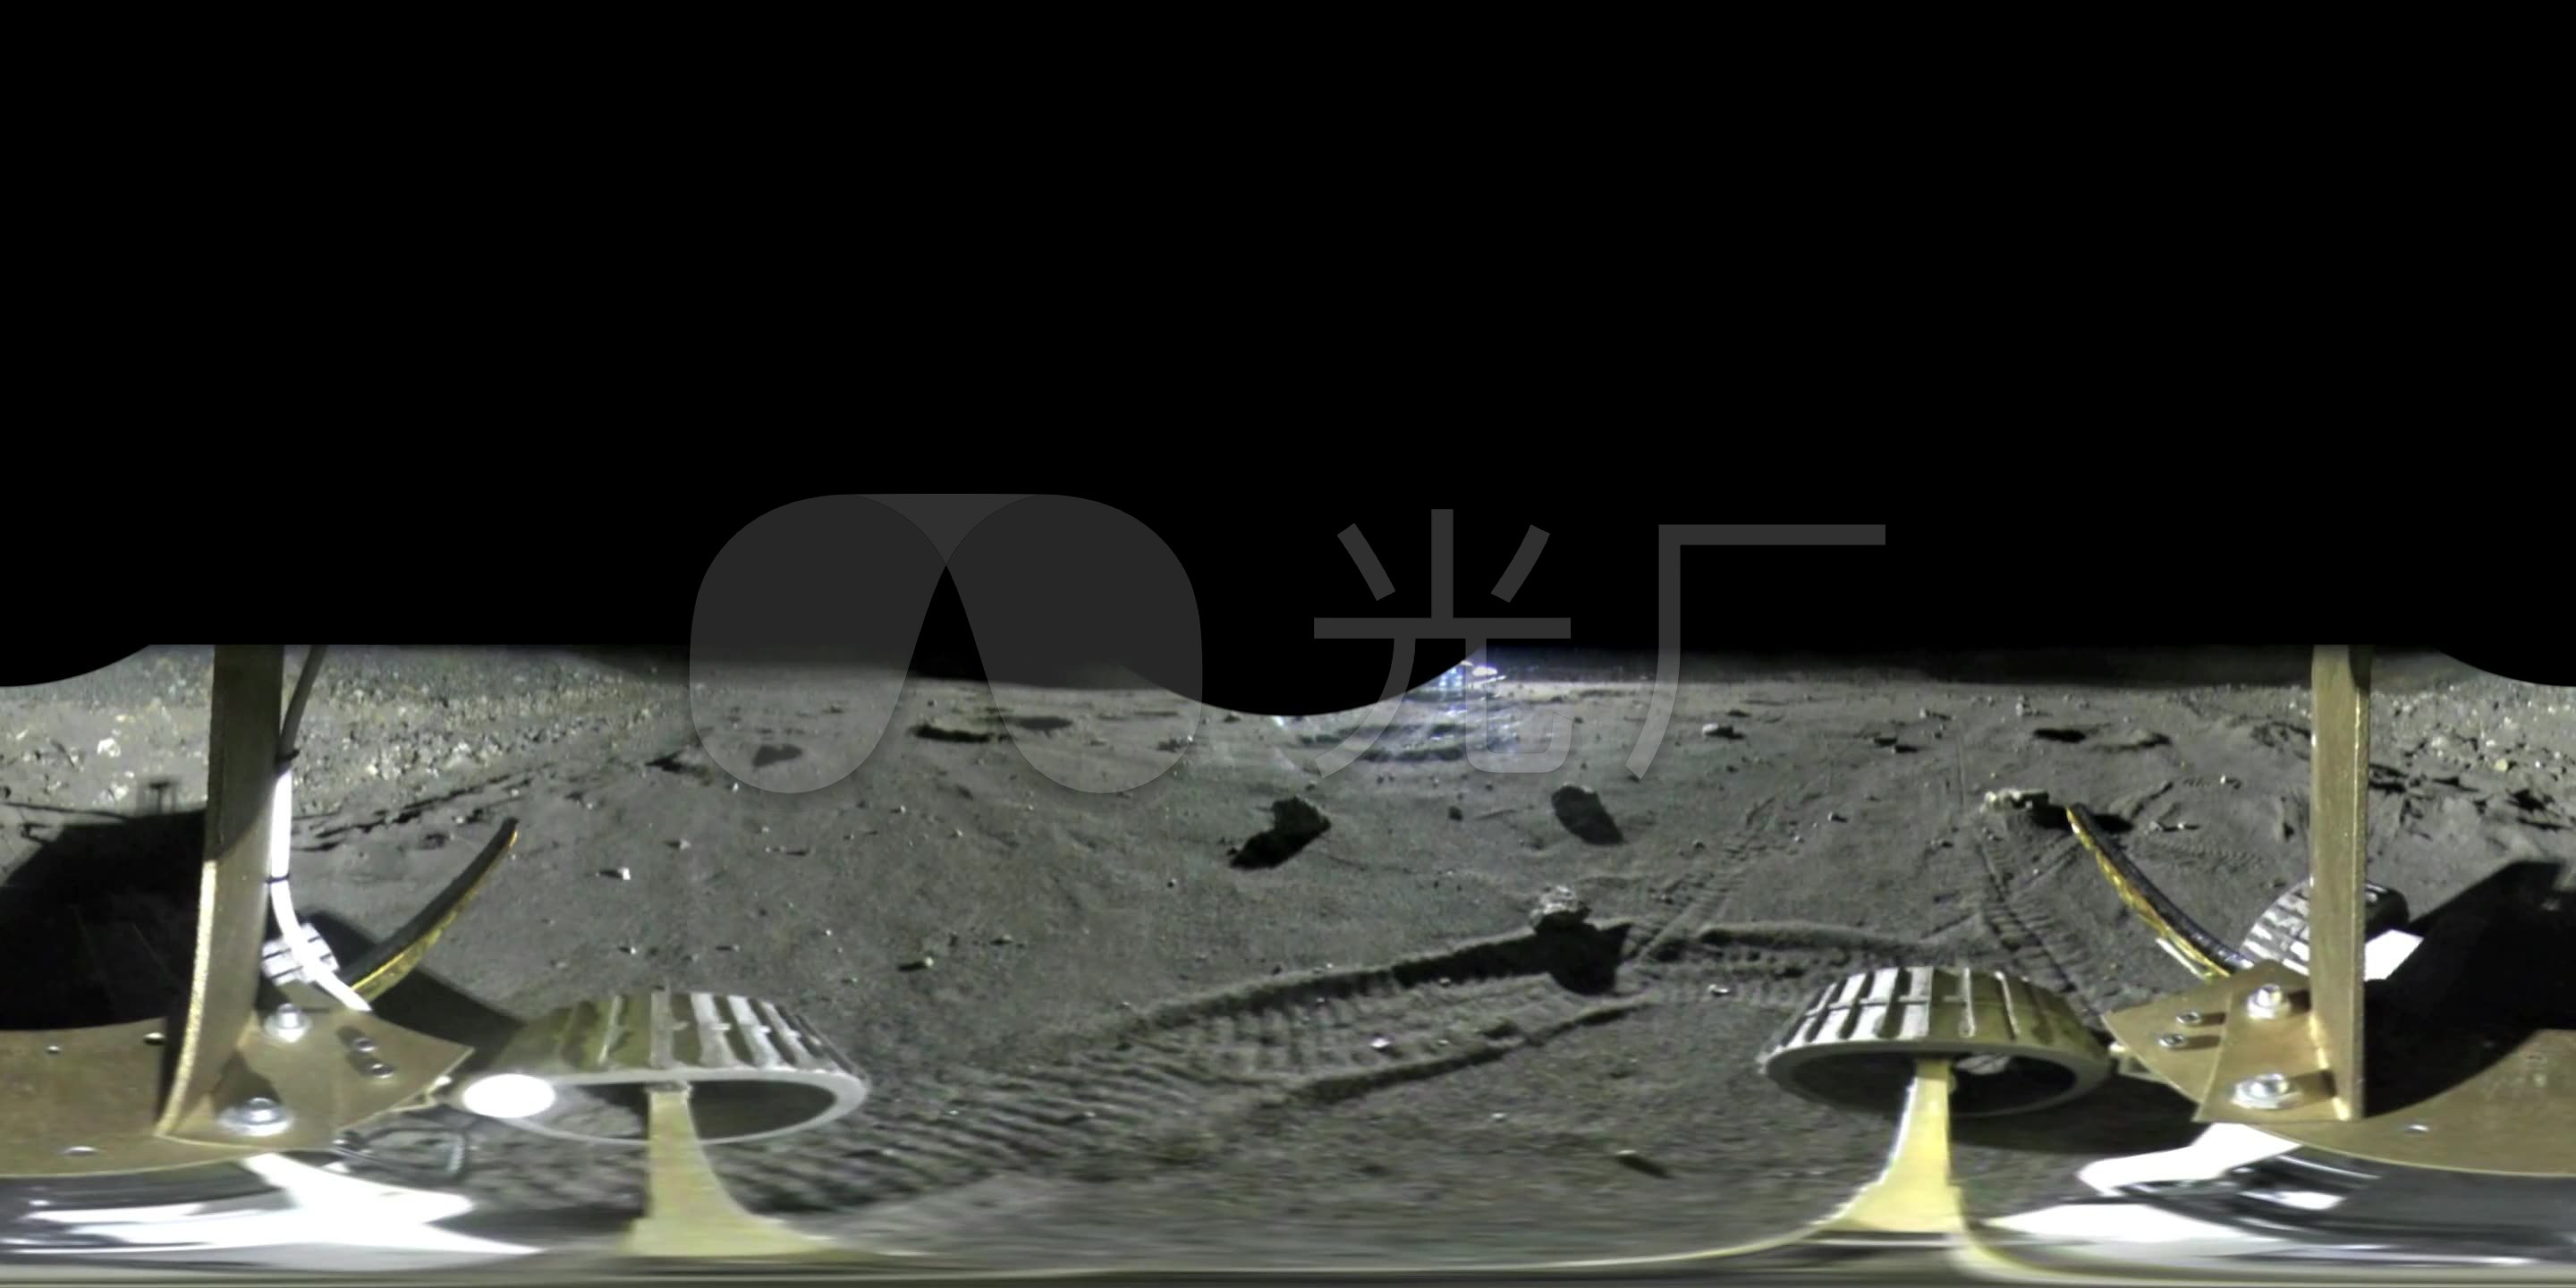 【vr全景】月球表面_2880x1440_高清视频素材下载(:)